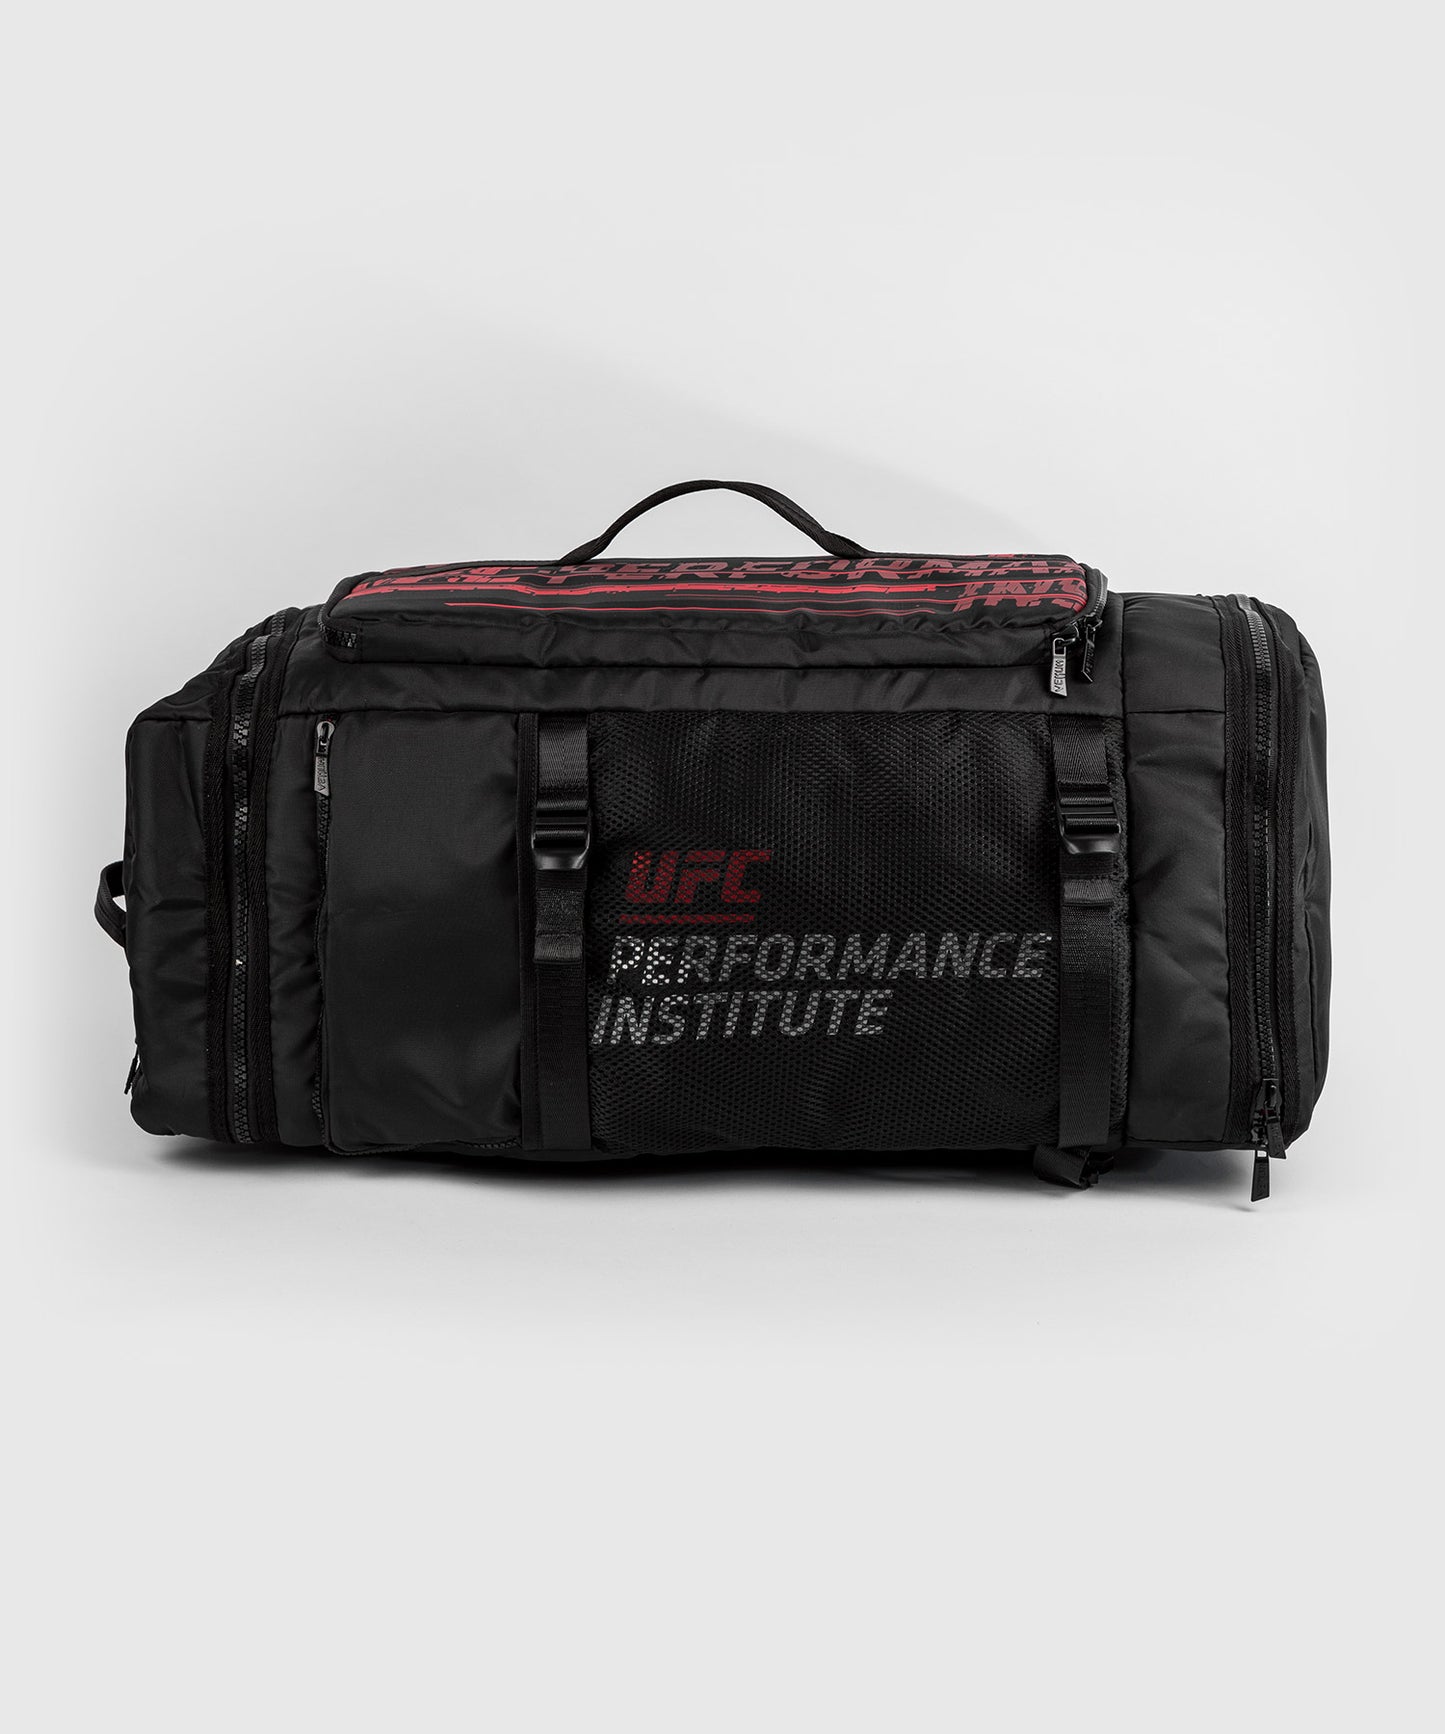 UFC Performance Institute 2.0 Mochila - Negro/Rojo